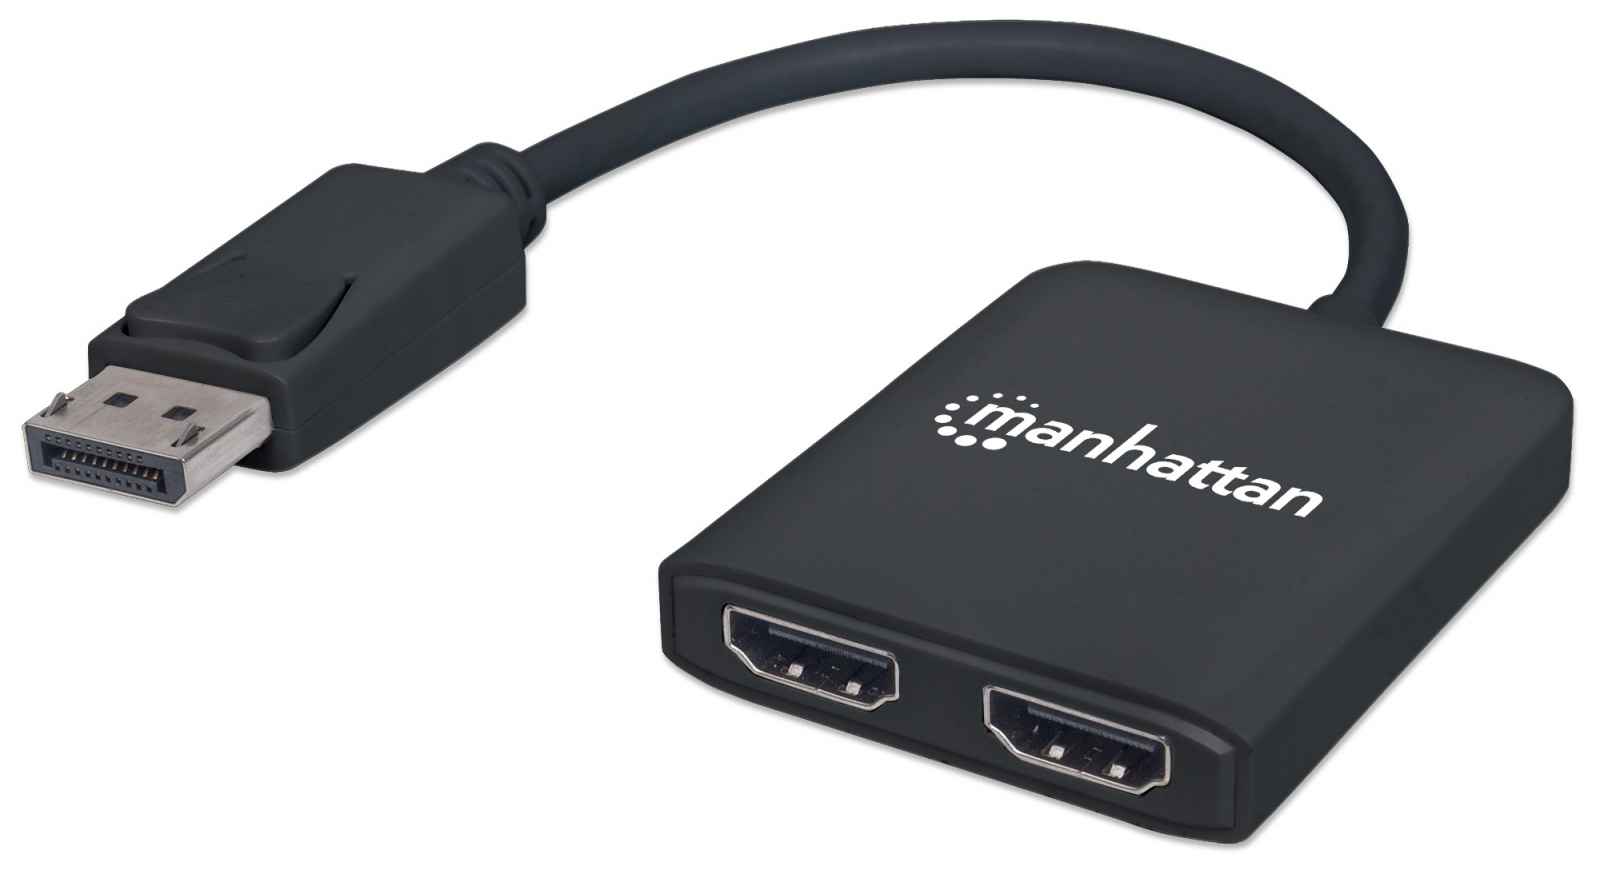 Manhattan Hub MST - de DisplayPort a 2 puertos HDMI (152716)